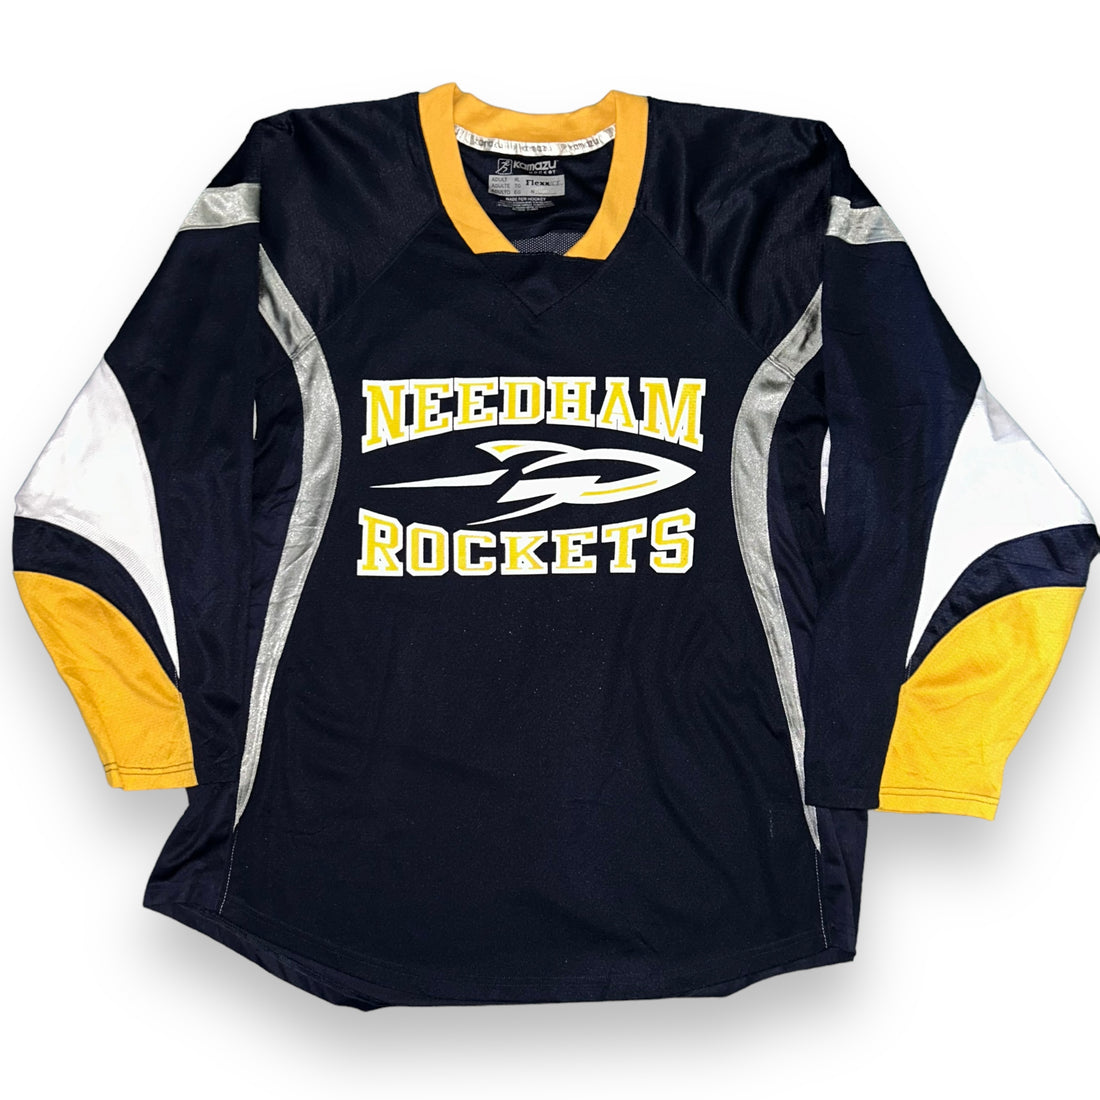 Jersey Hockey Needham ROCKETS  (L)